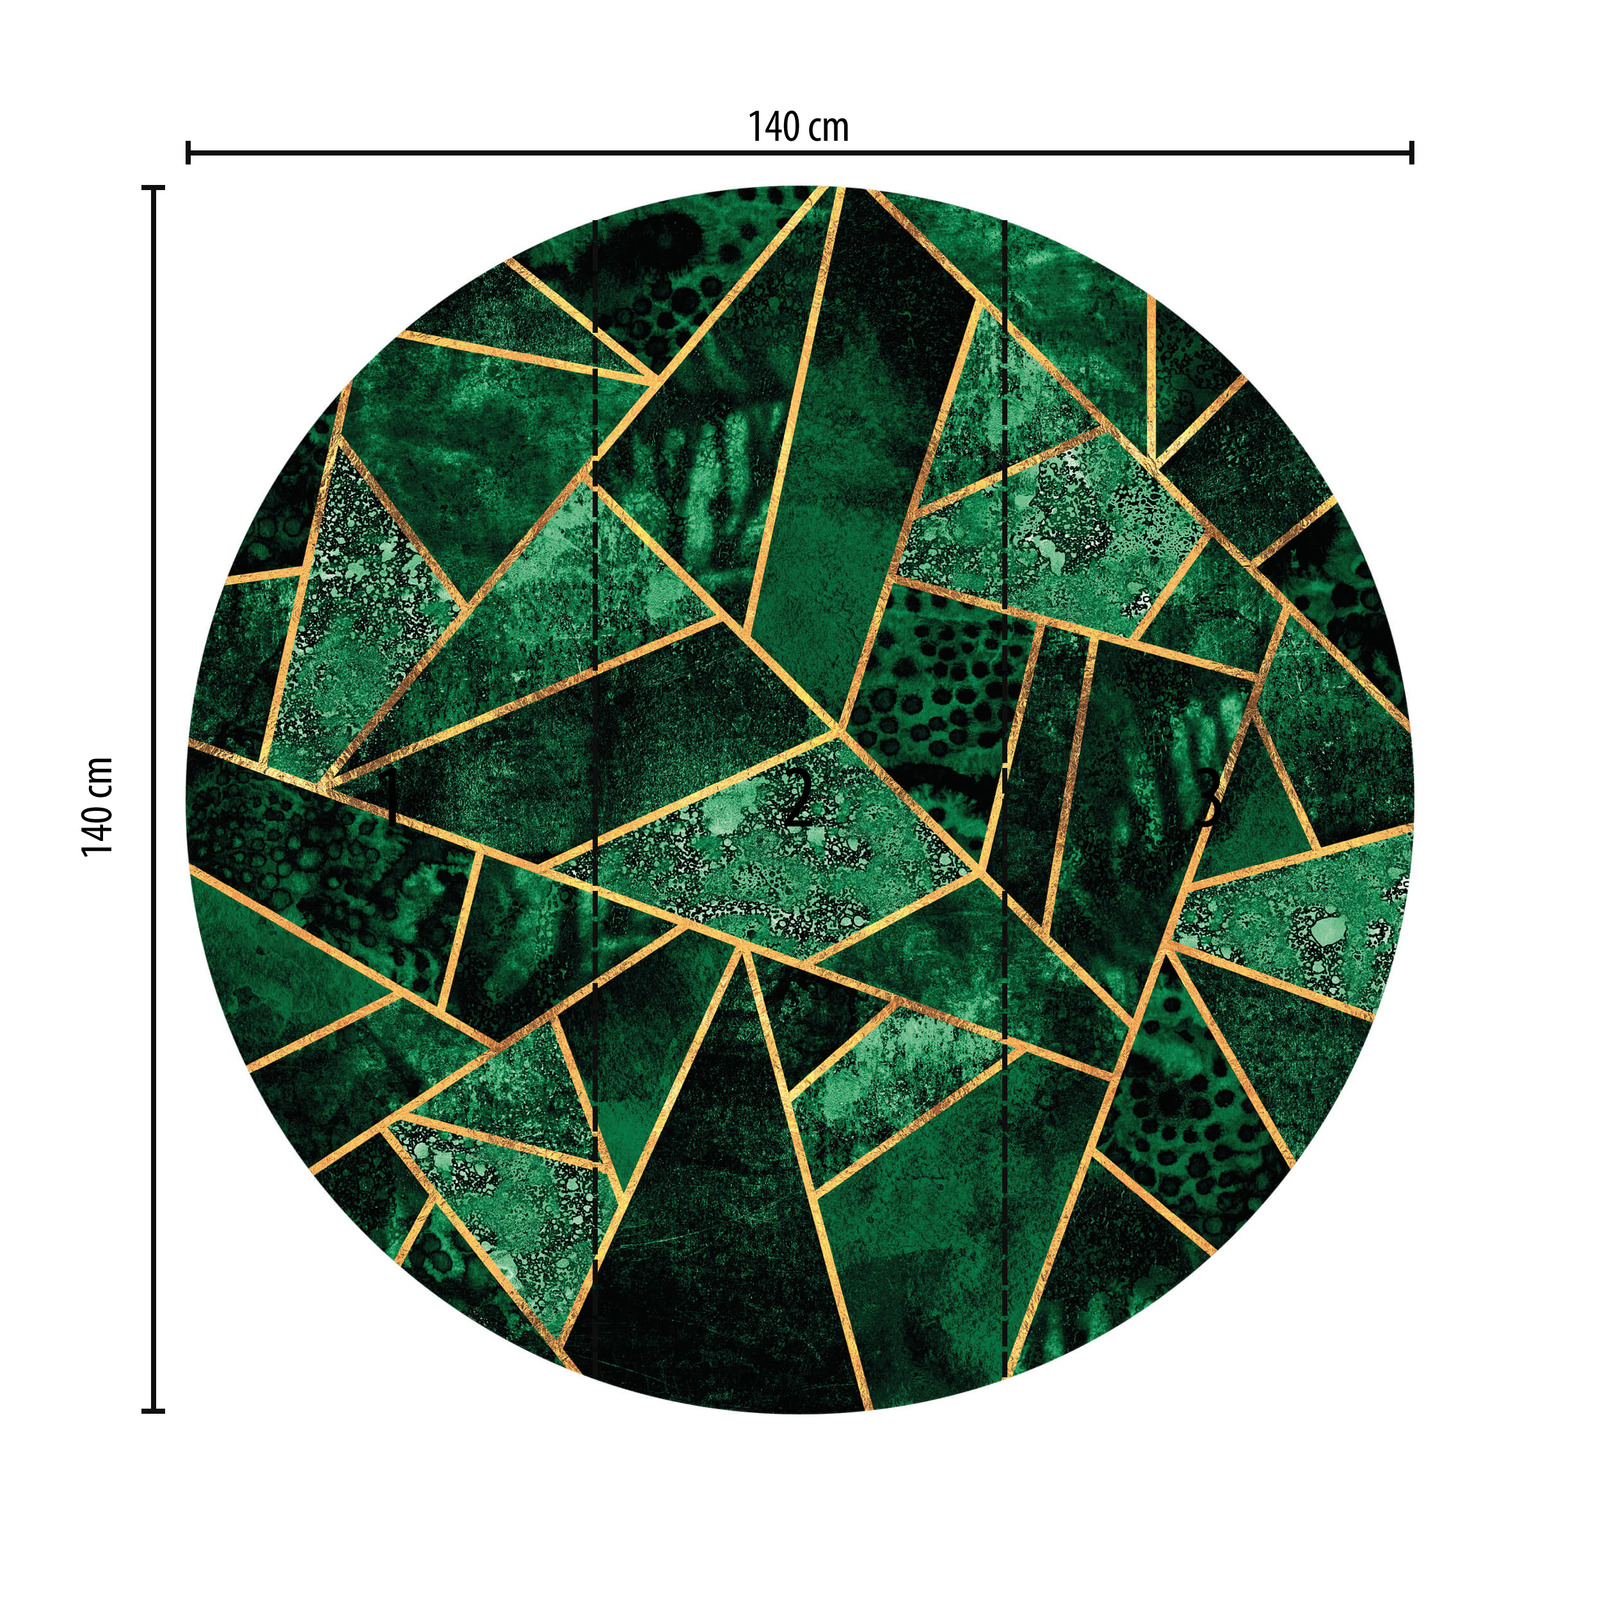             Photo wallpaper round geometric shapes, green
        